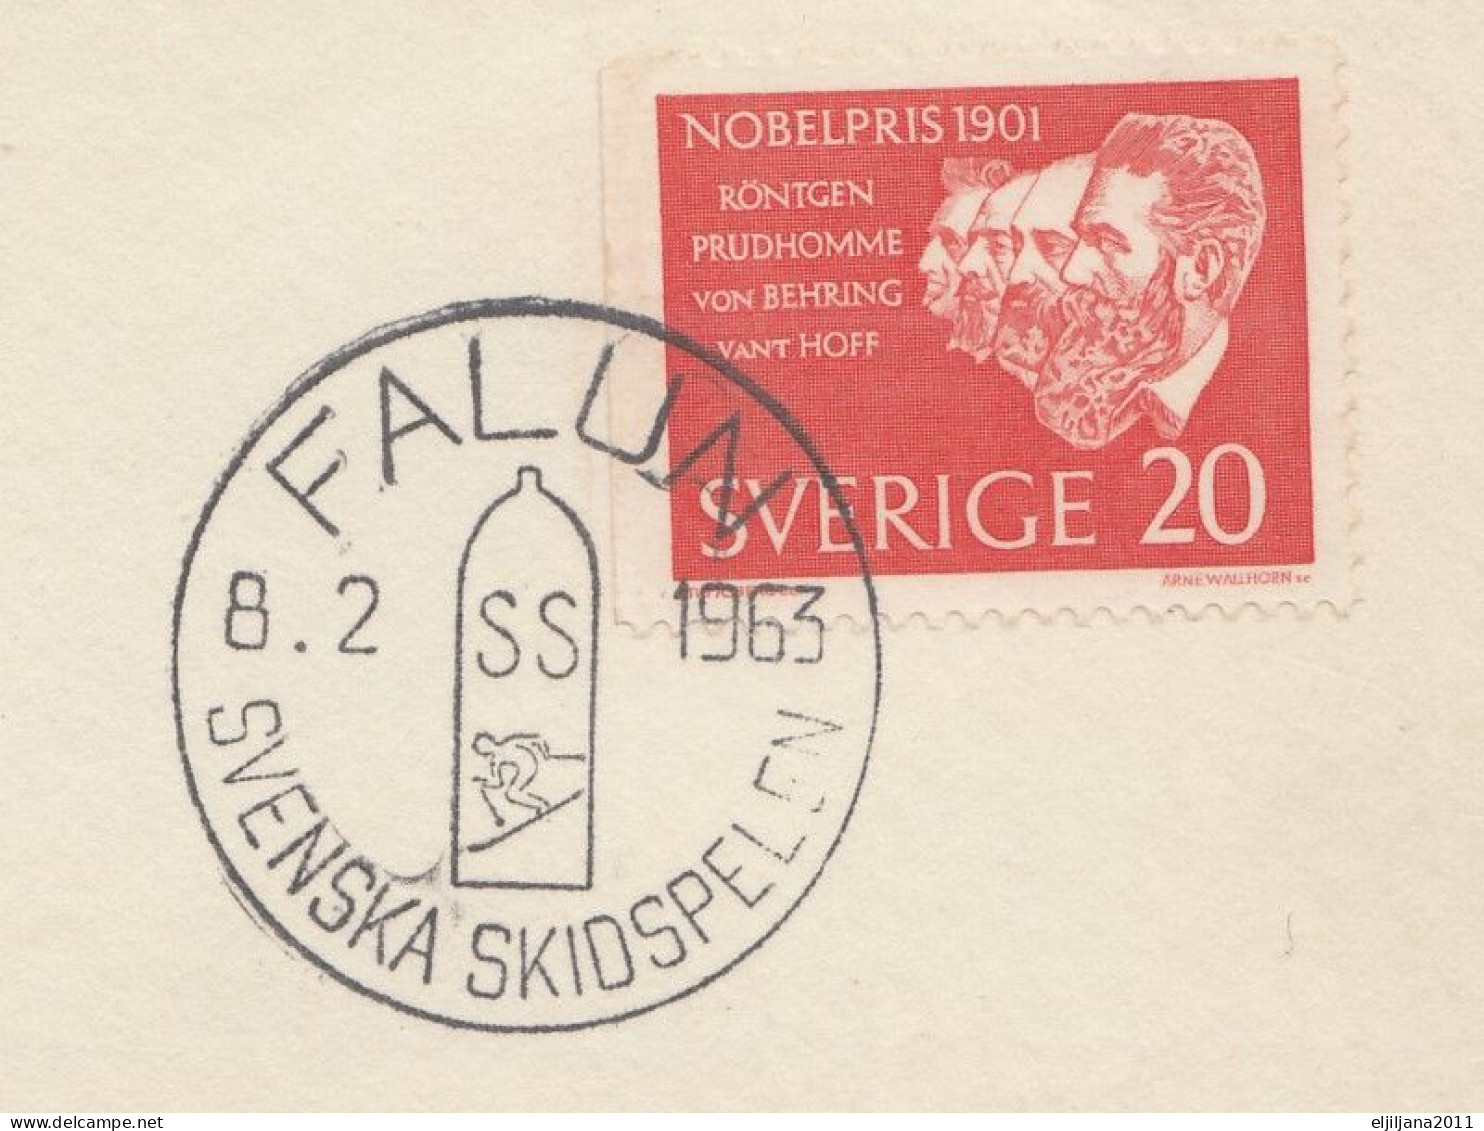 Action !! SALE !! 50 % OFF !! ⁕ Sweden / Sverige 1963  Skiing FALUN, SUNDSVALL, LULEA  3v Covers - Storia Postale